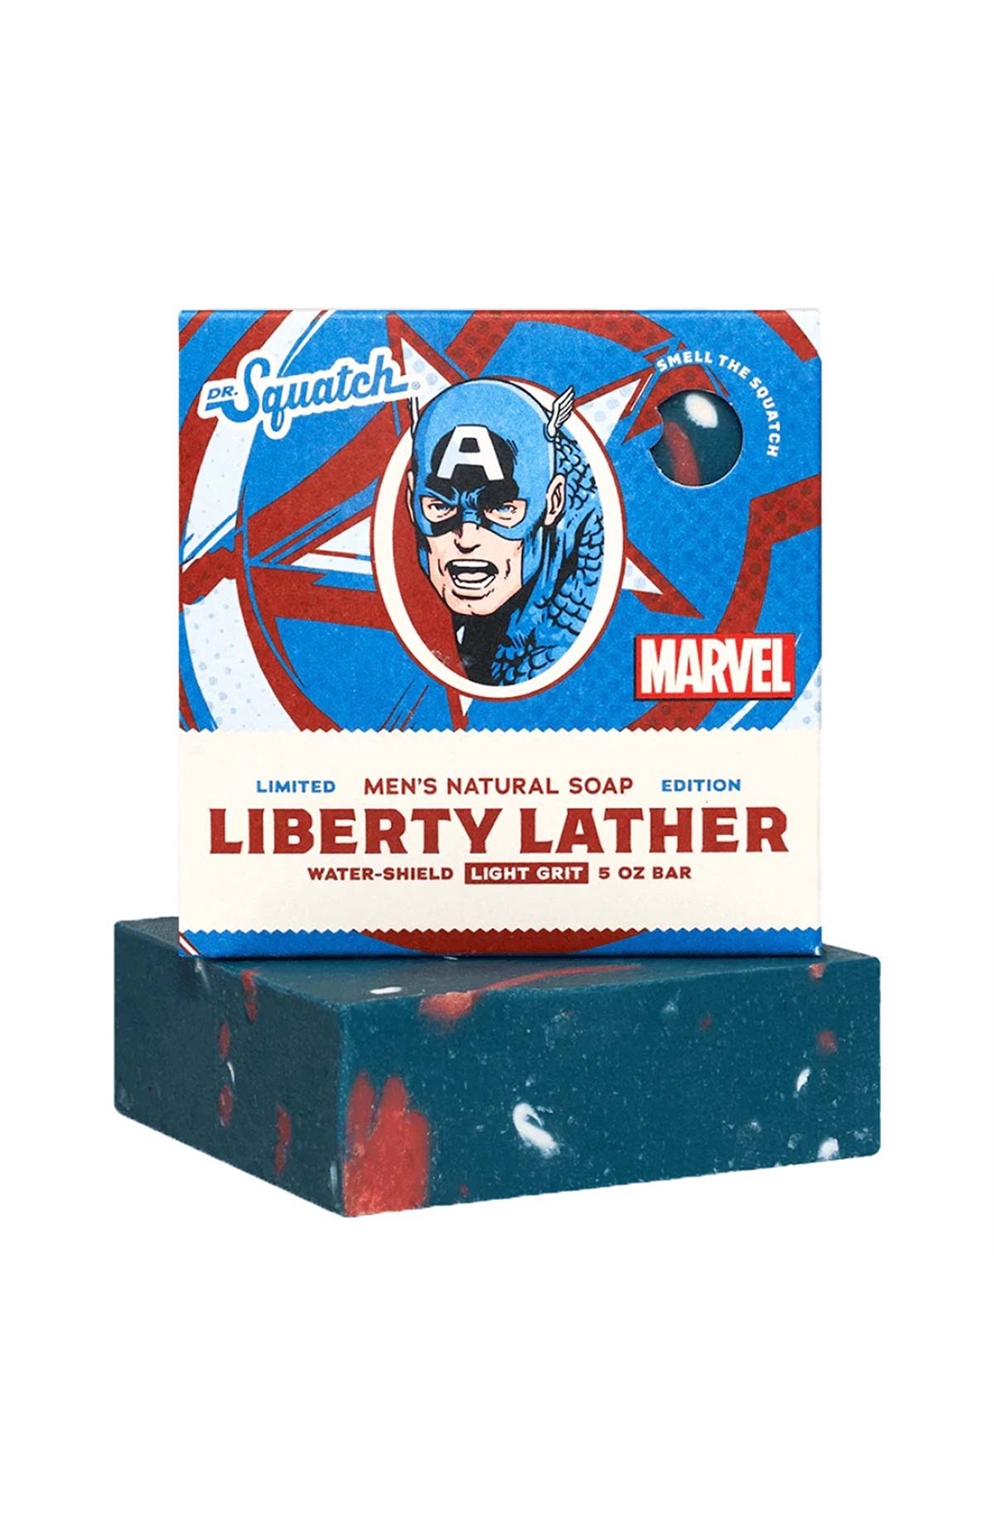 Dr Squatch Liberty Lather Bar Soap